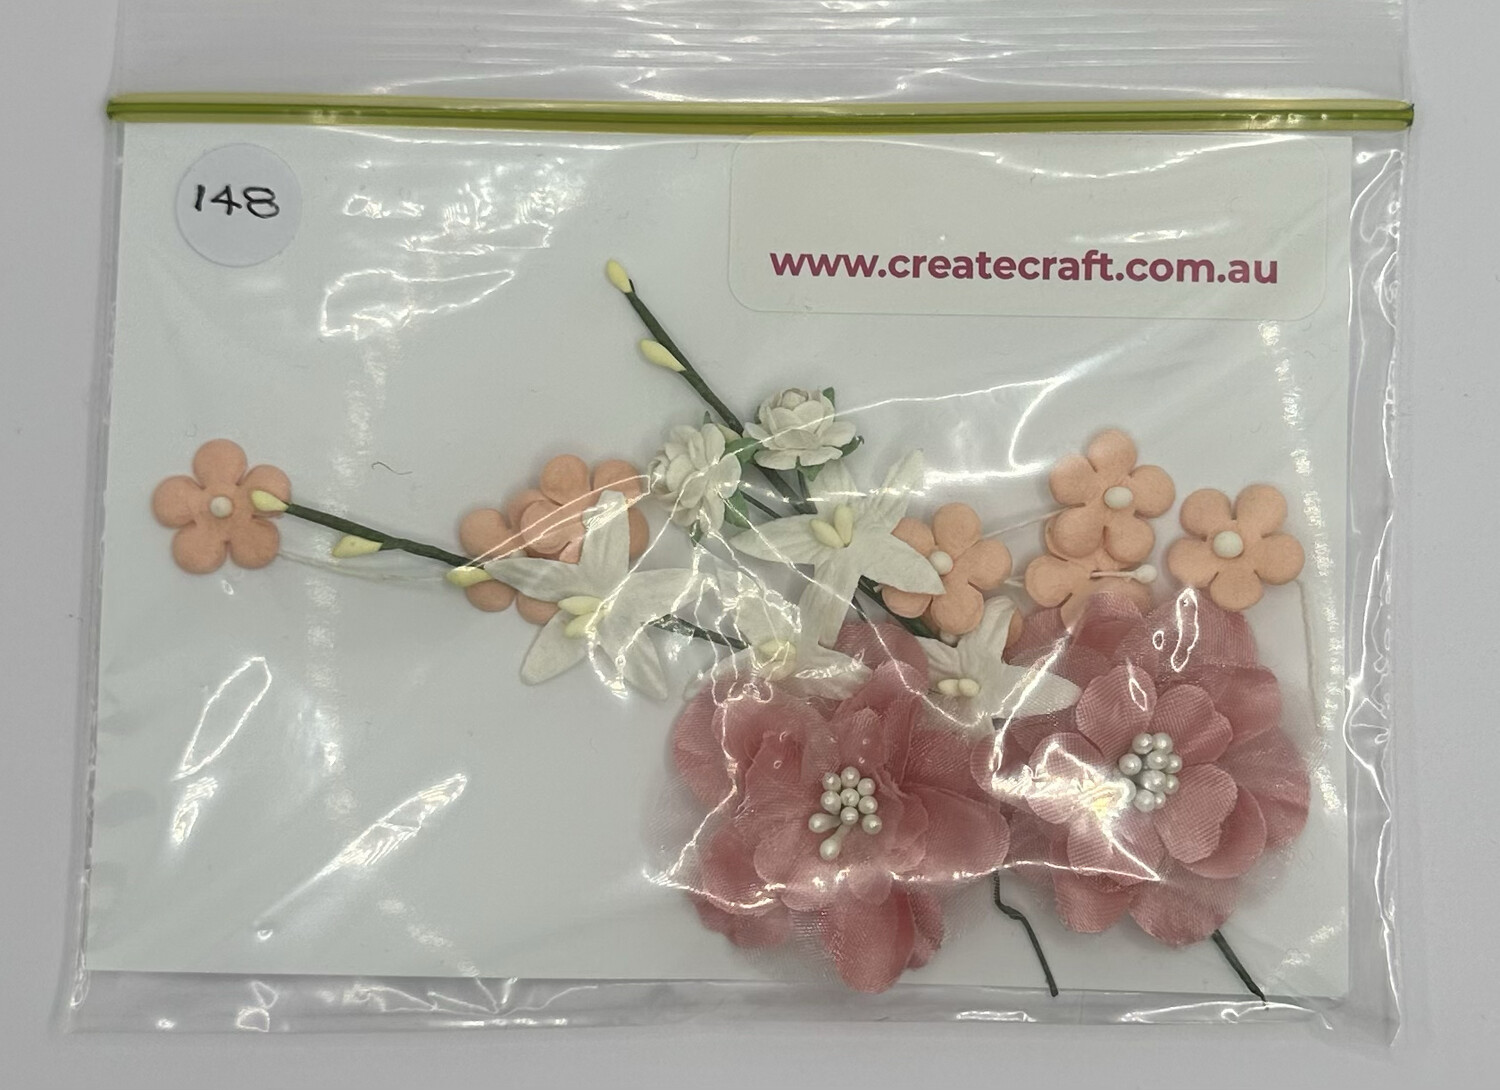 Create Craft Bag 148